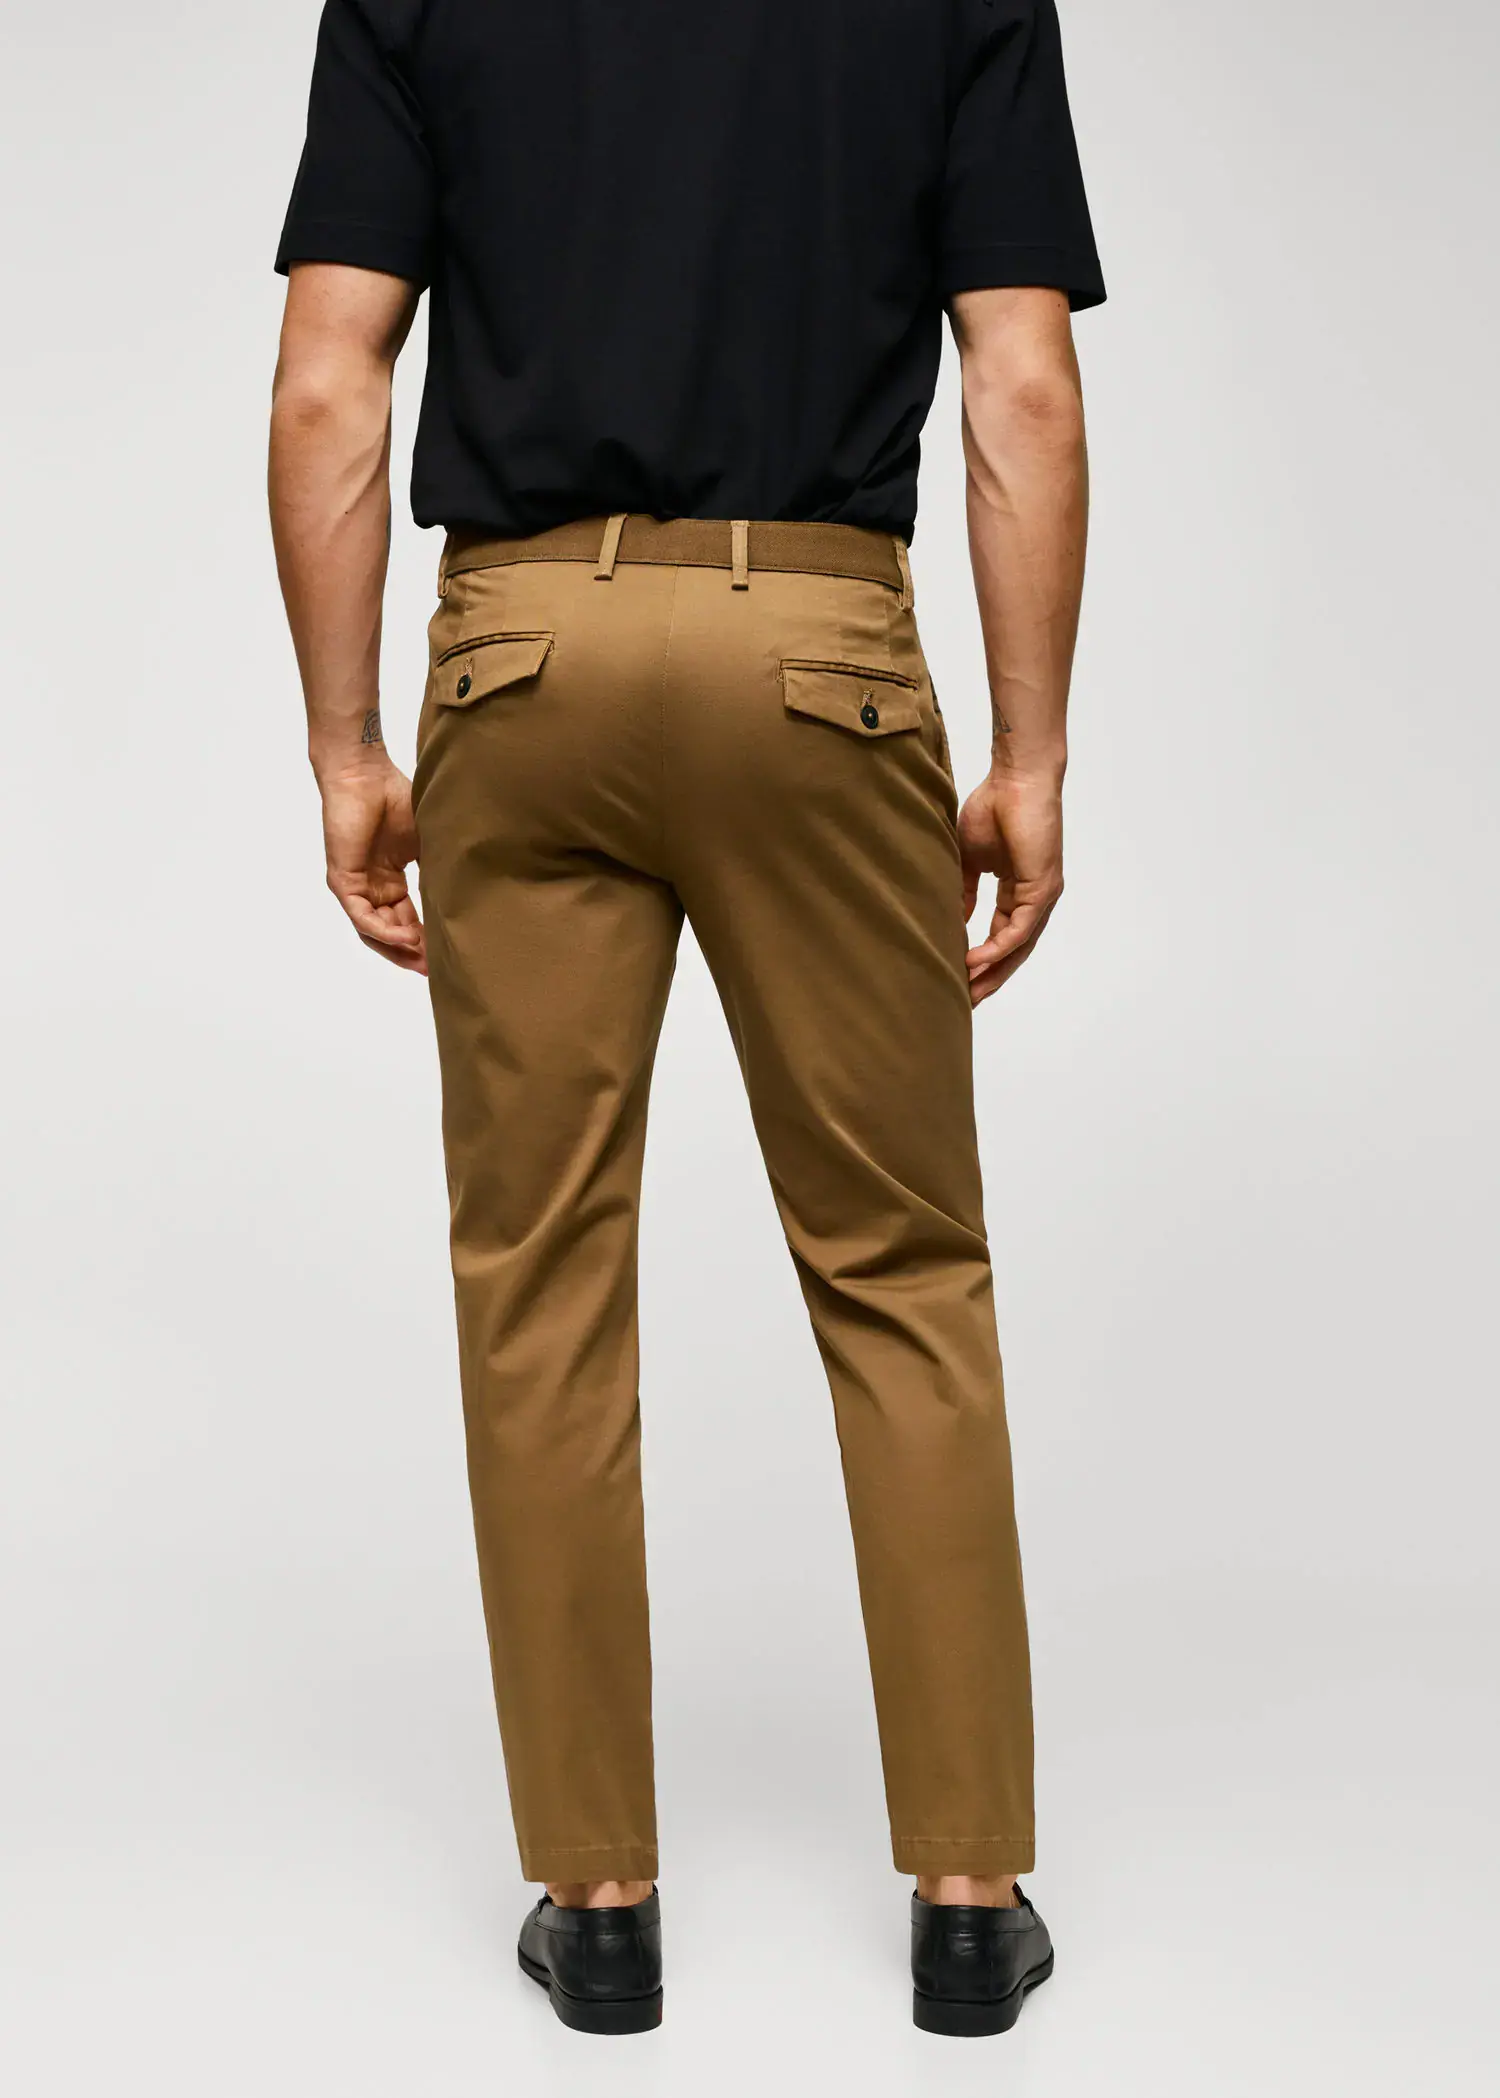 Mango Cotton tapered crop pants. a man wearing a black shirt and brown pants. 